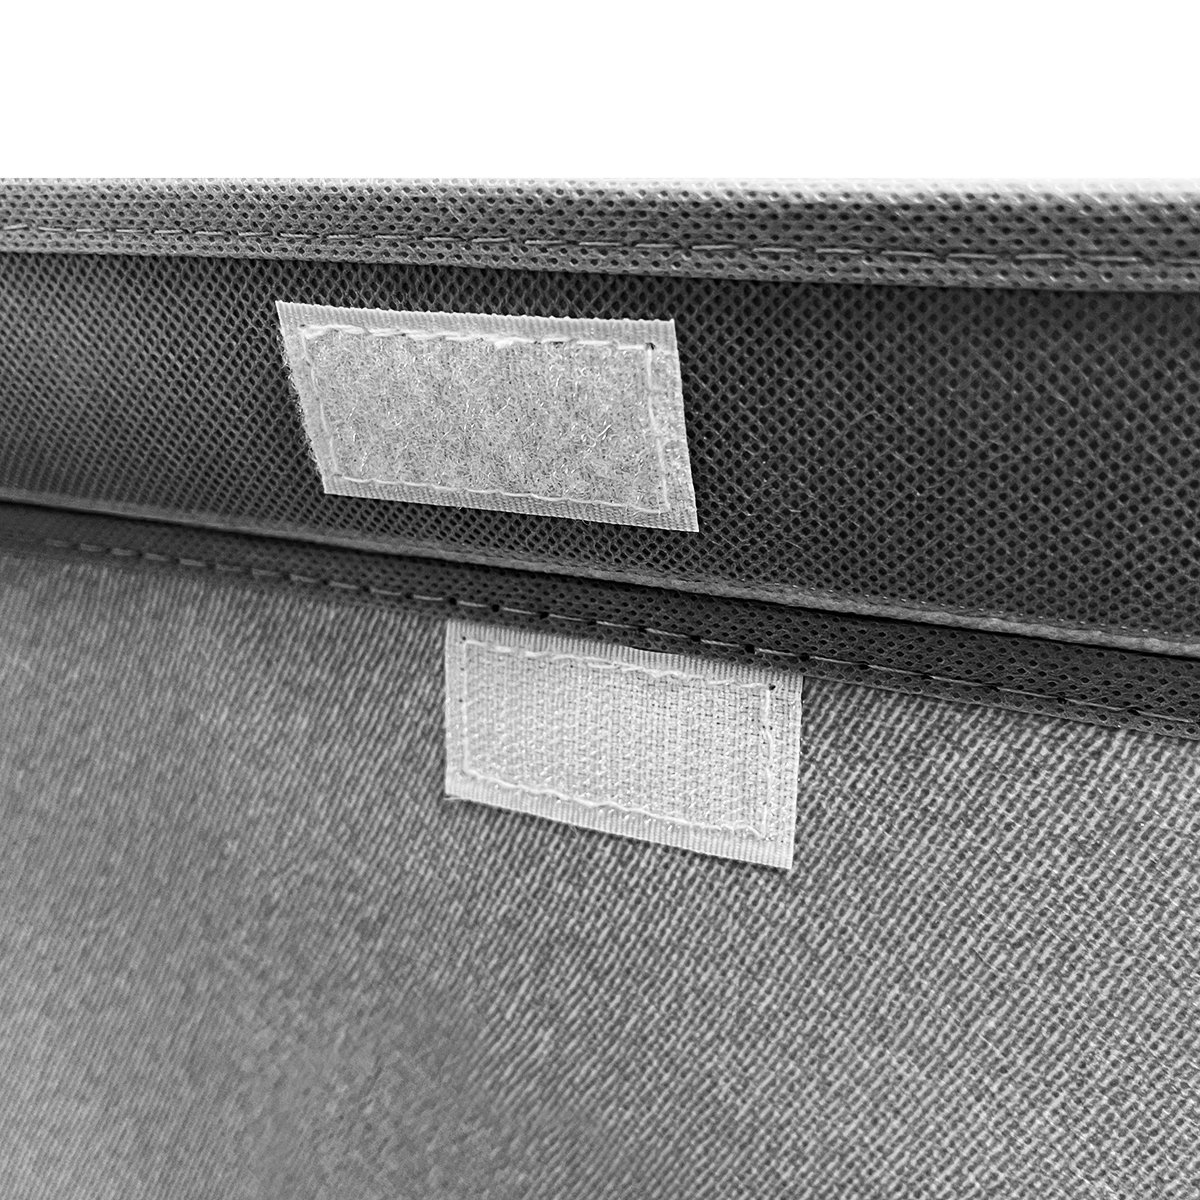 Ящик для хранения с крышкой МВМ My Home XL текстильный, 500х350х310 мм, серый (TH-07 XL GRAY) - фото 2